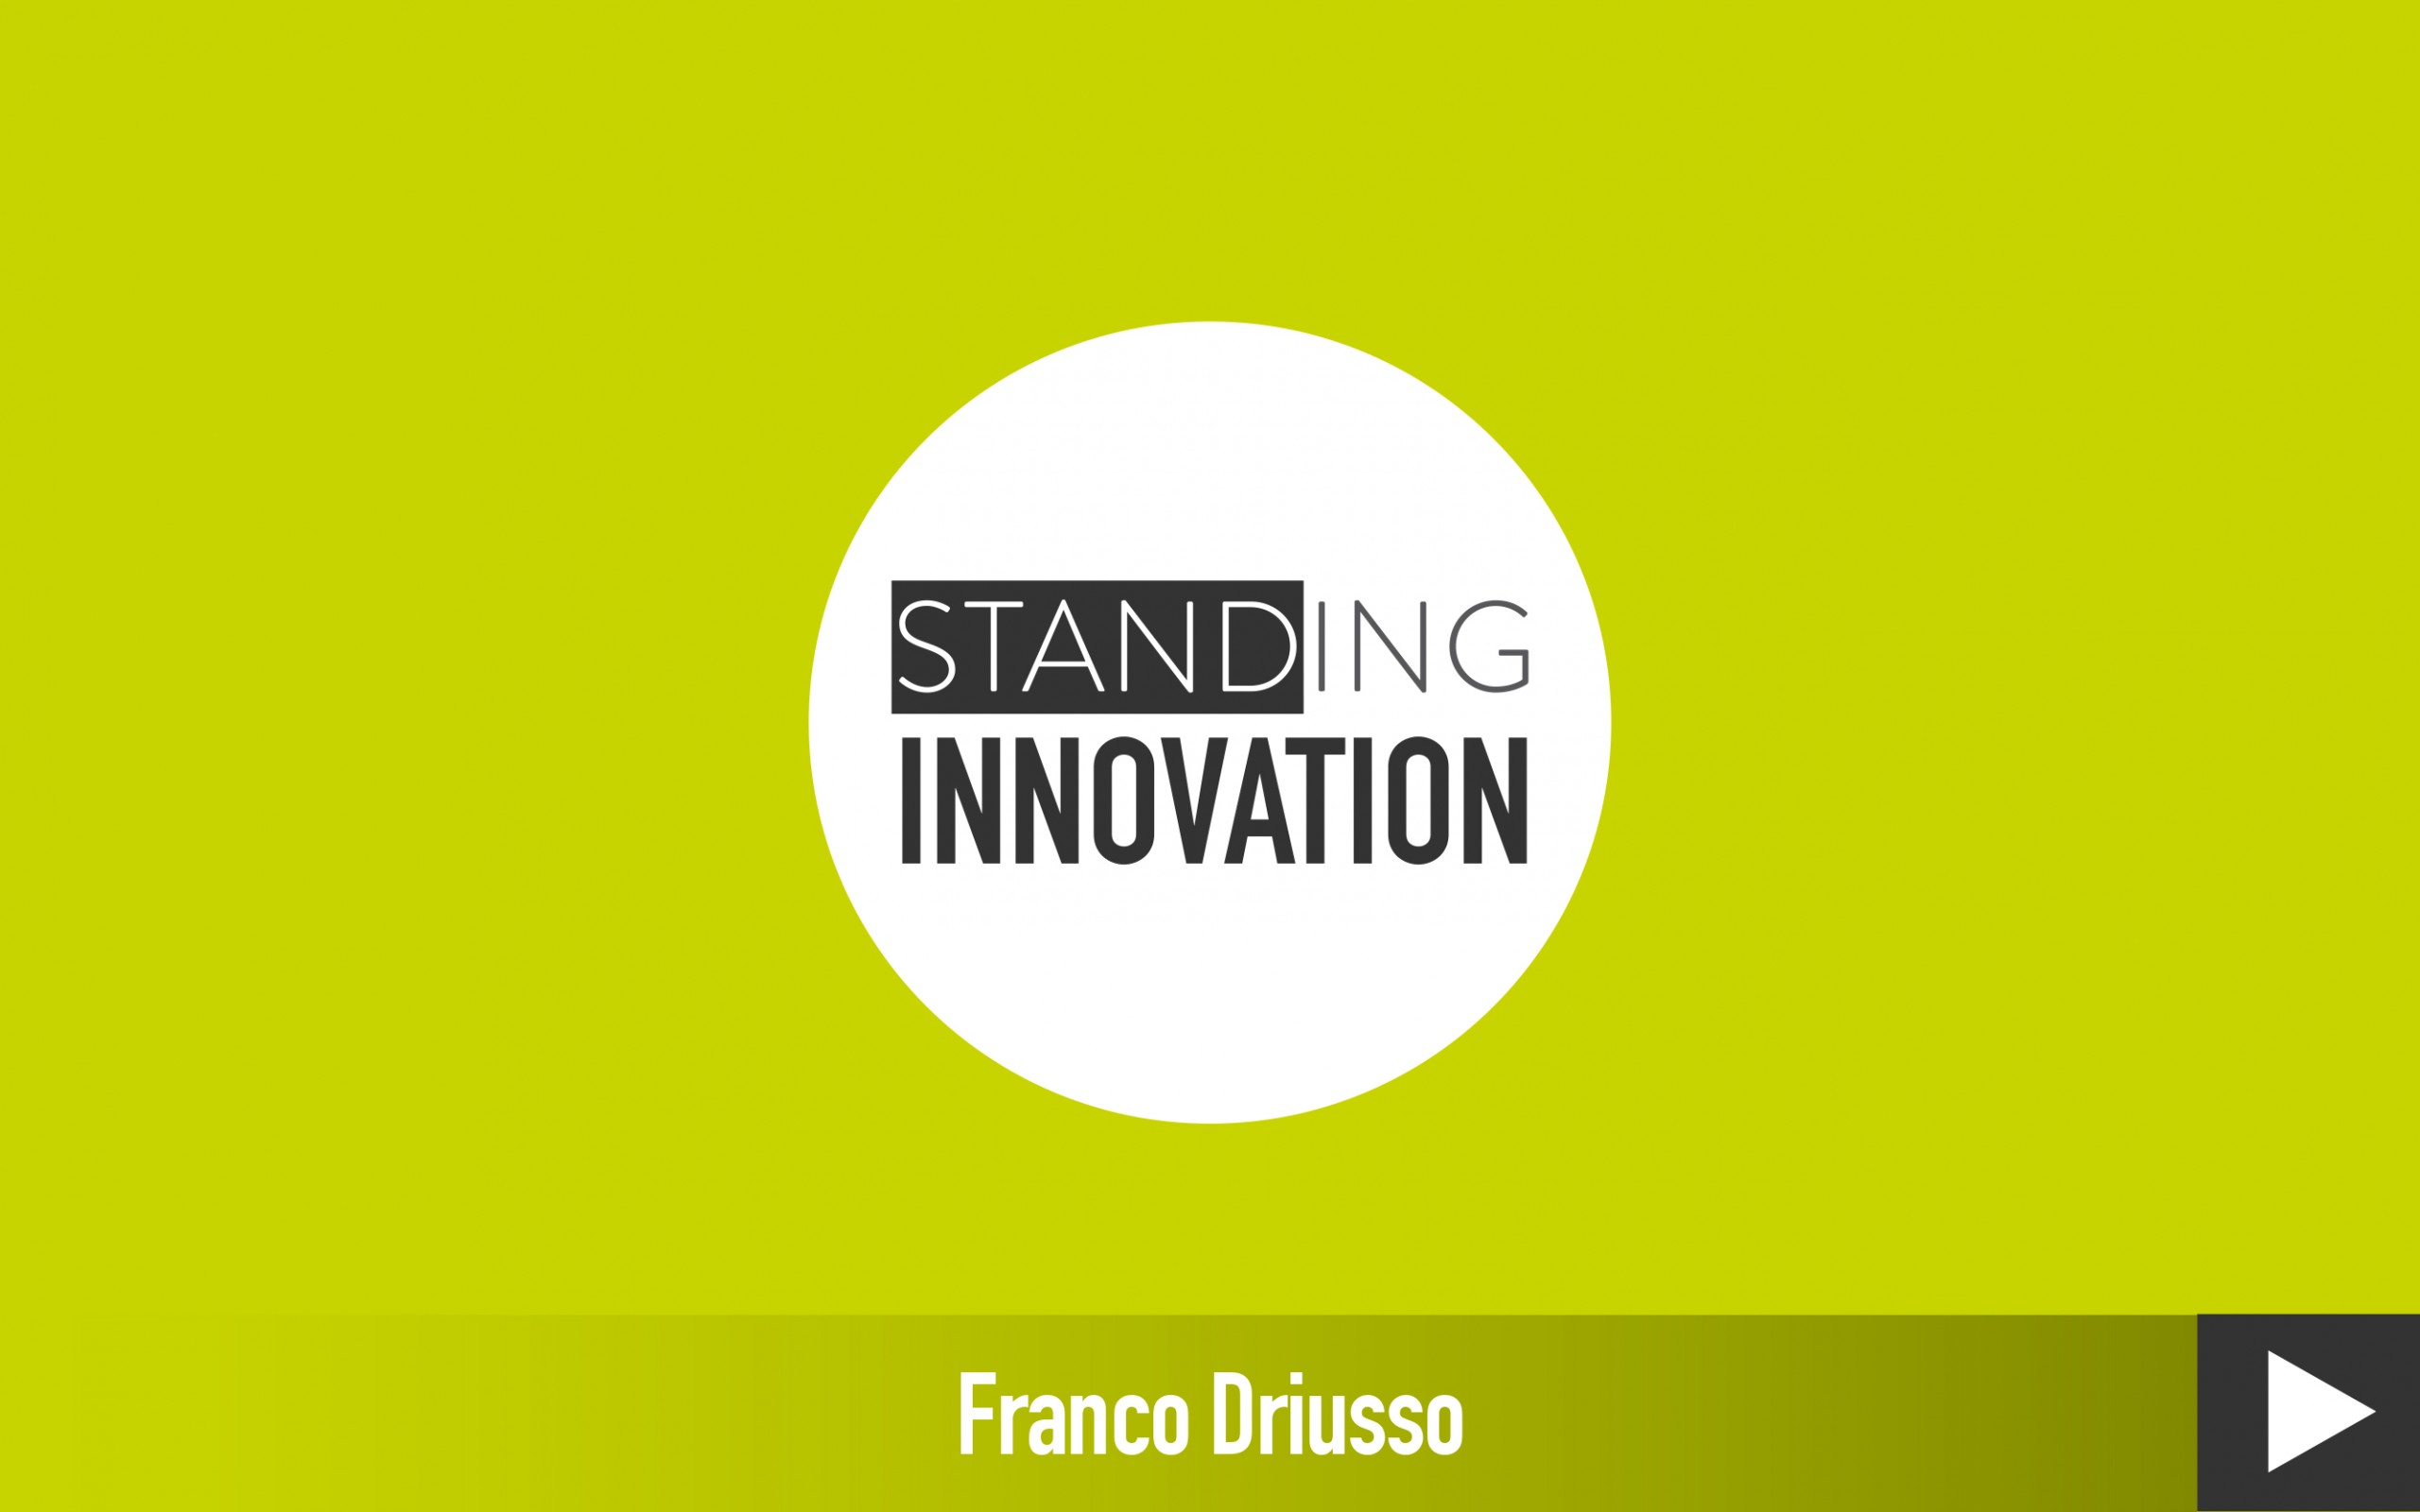 Standing innovation Franco Driusso